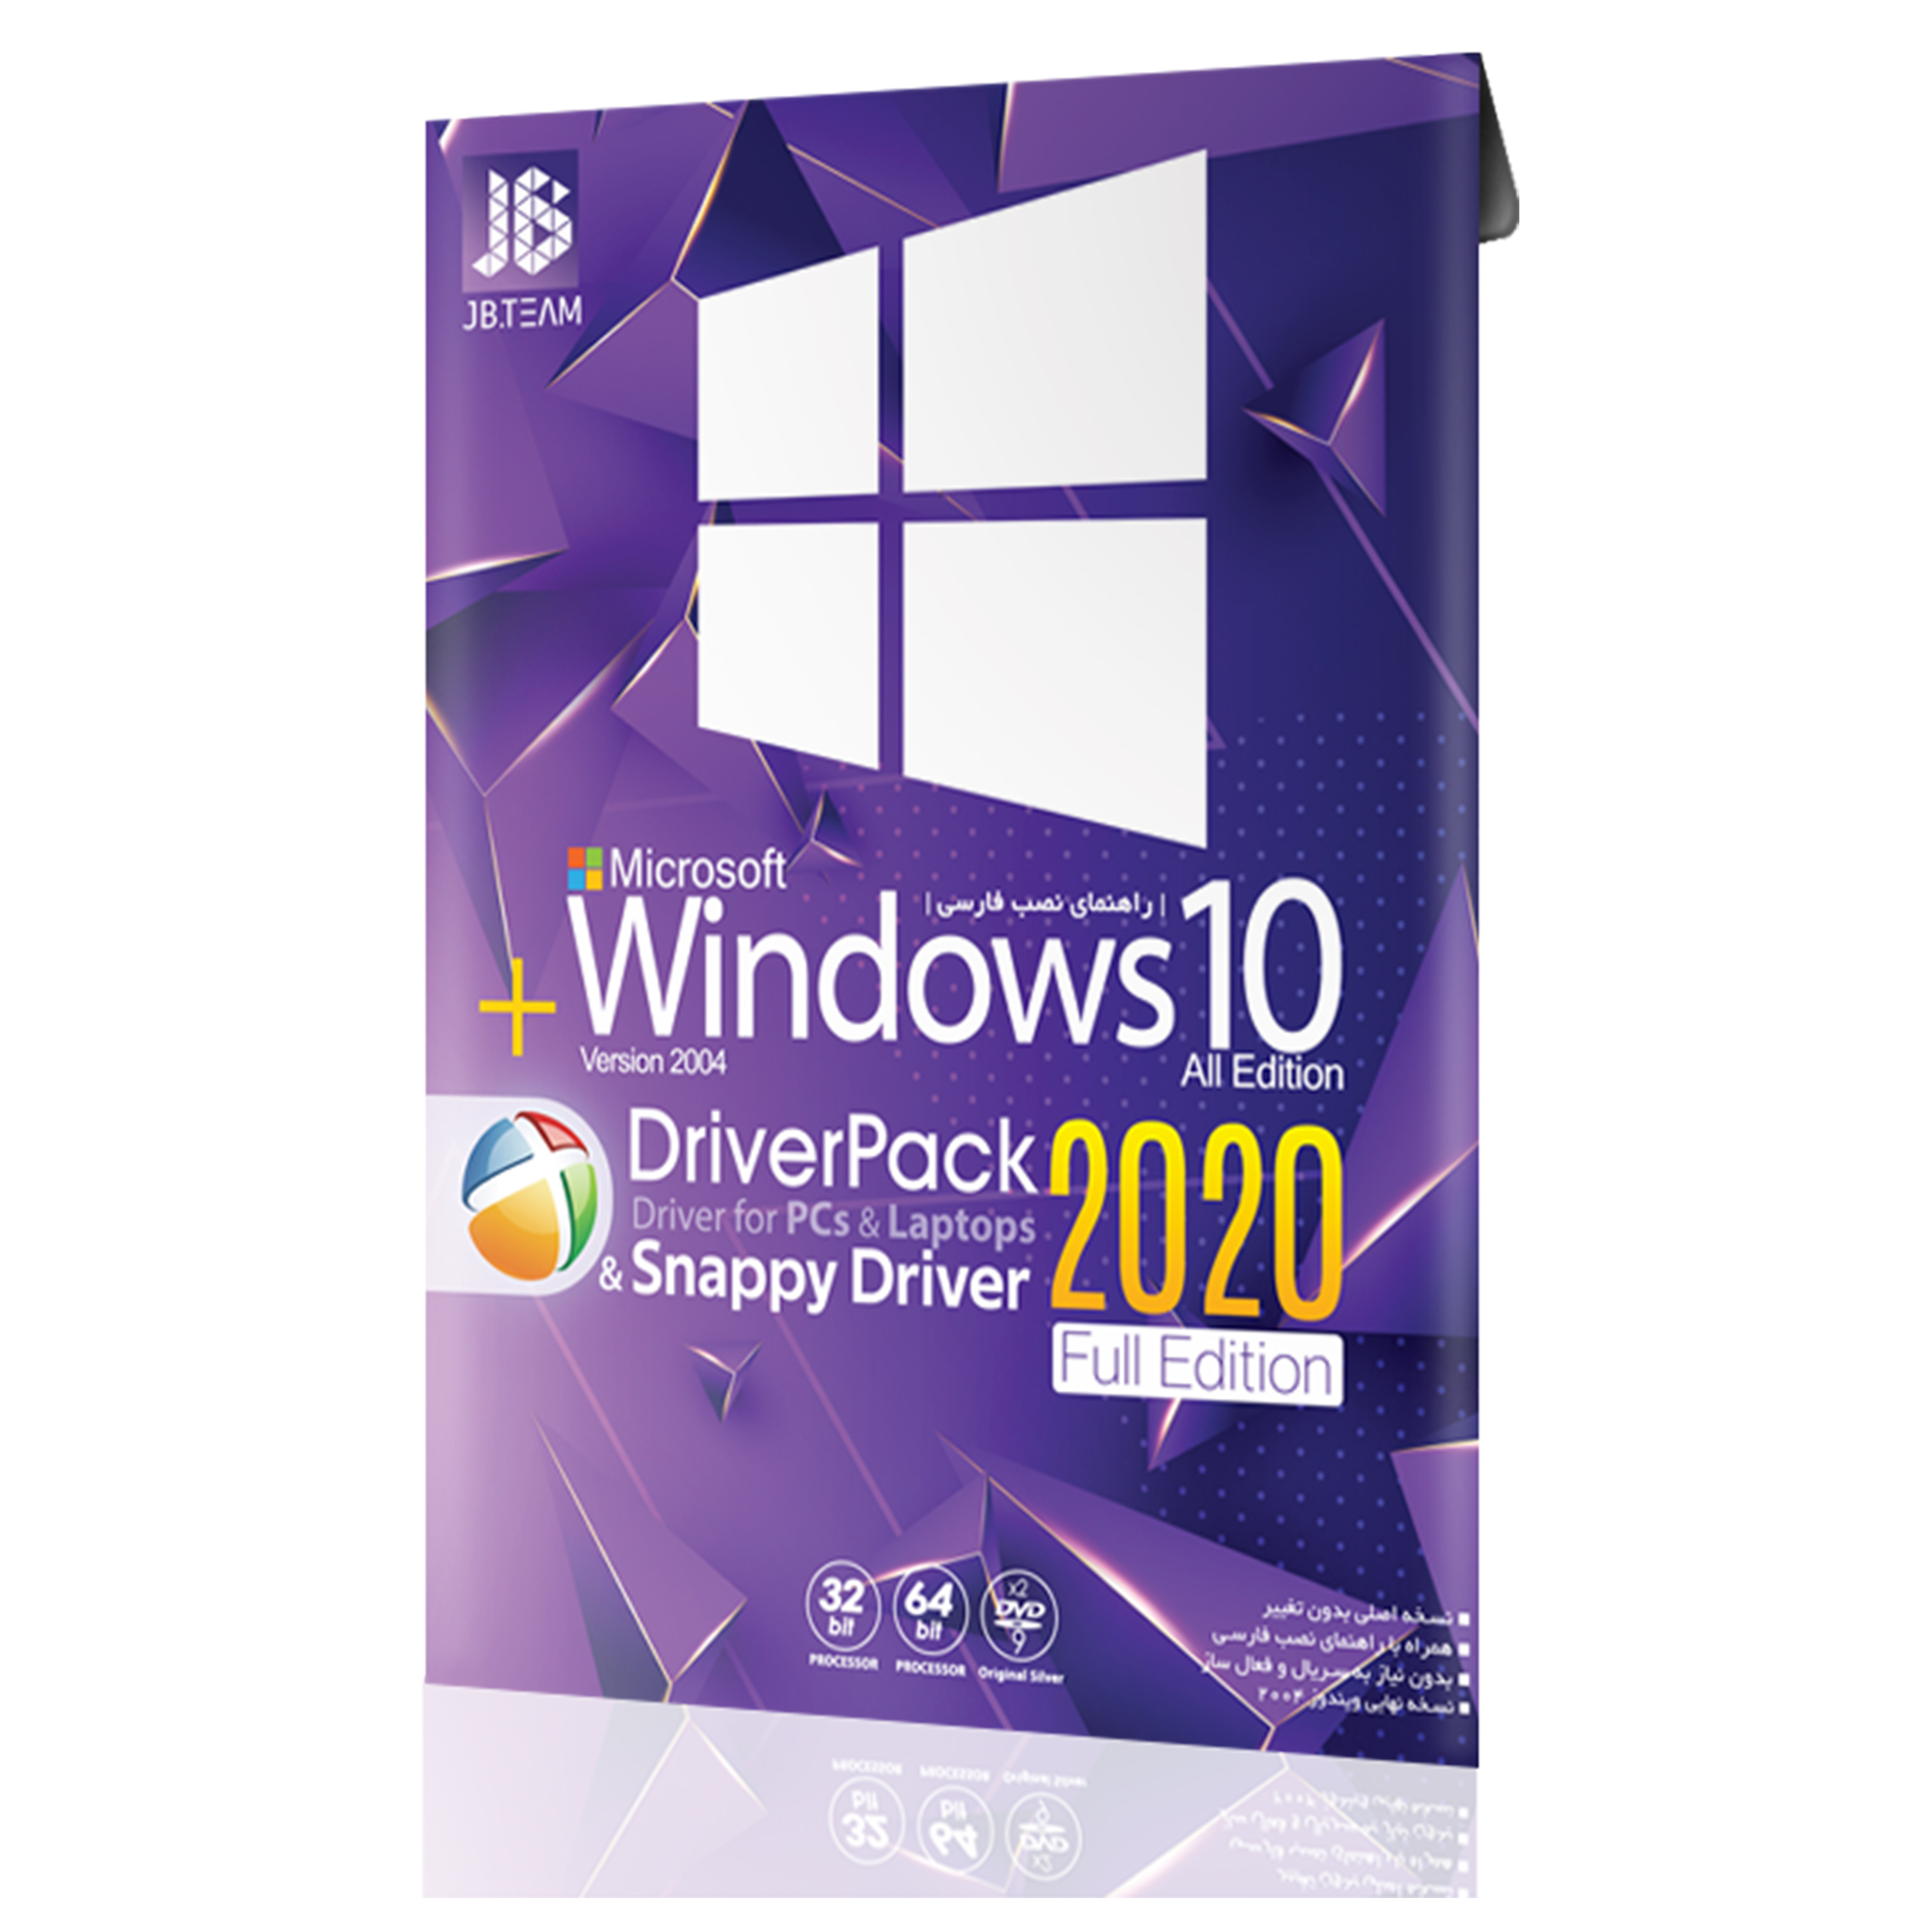 سیستم عامل Windows 10 + Driver Pack 2020 نشر جی بی تیم